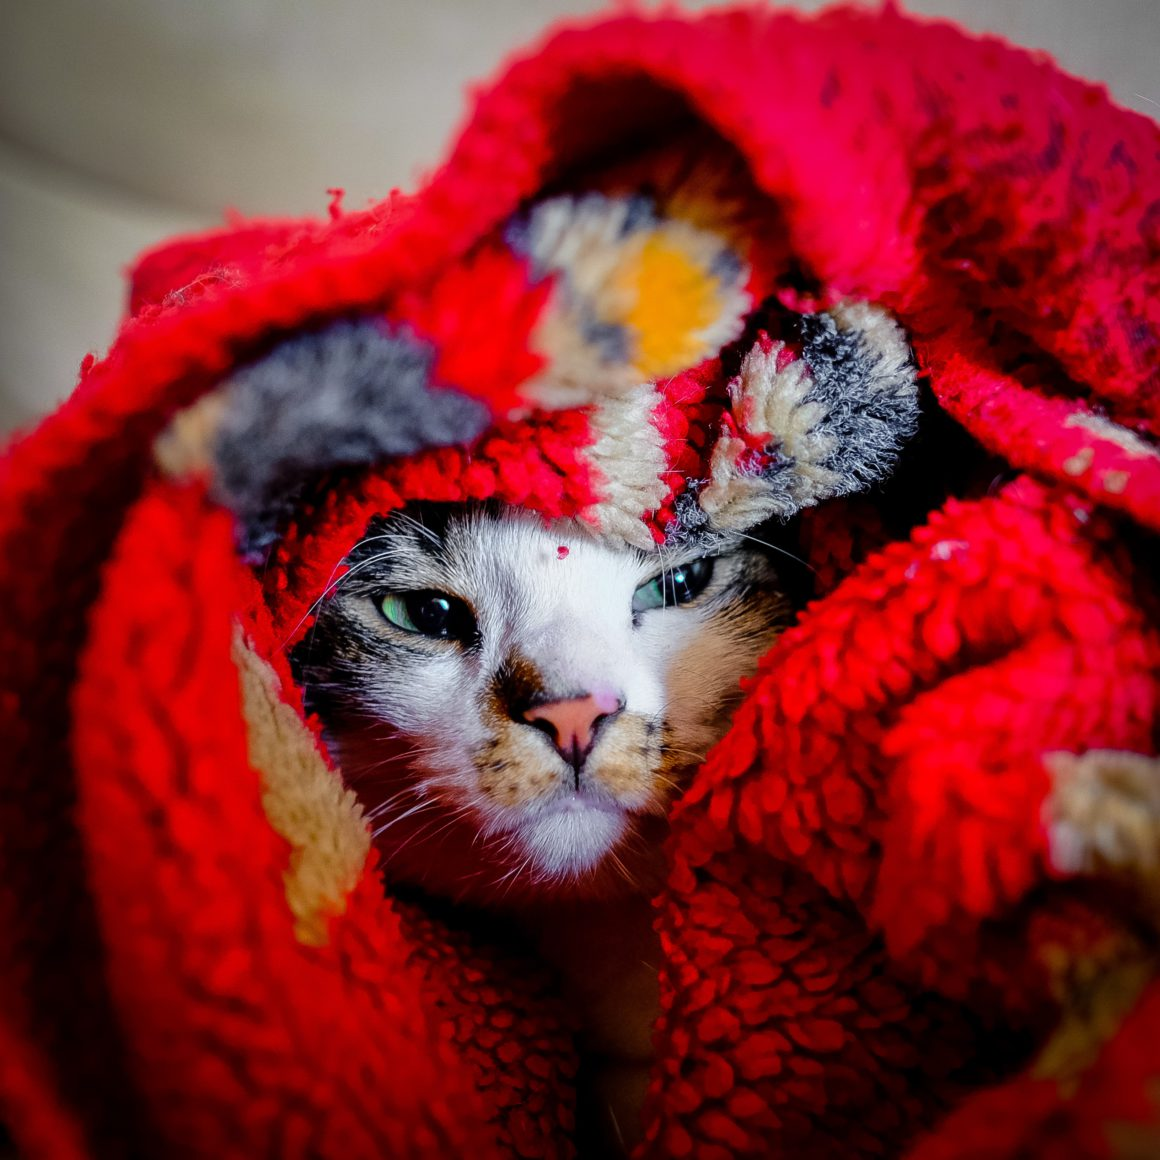 Cat cuddling in blankets